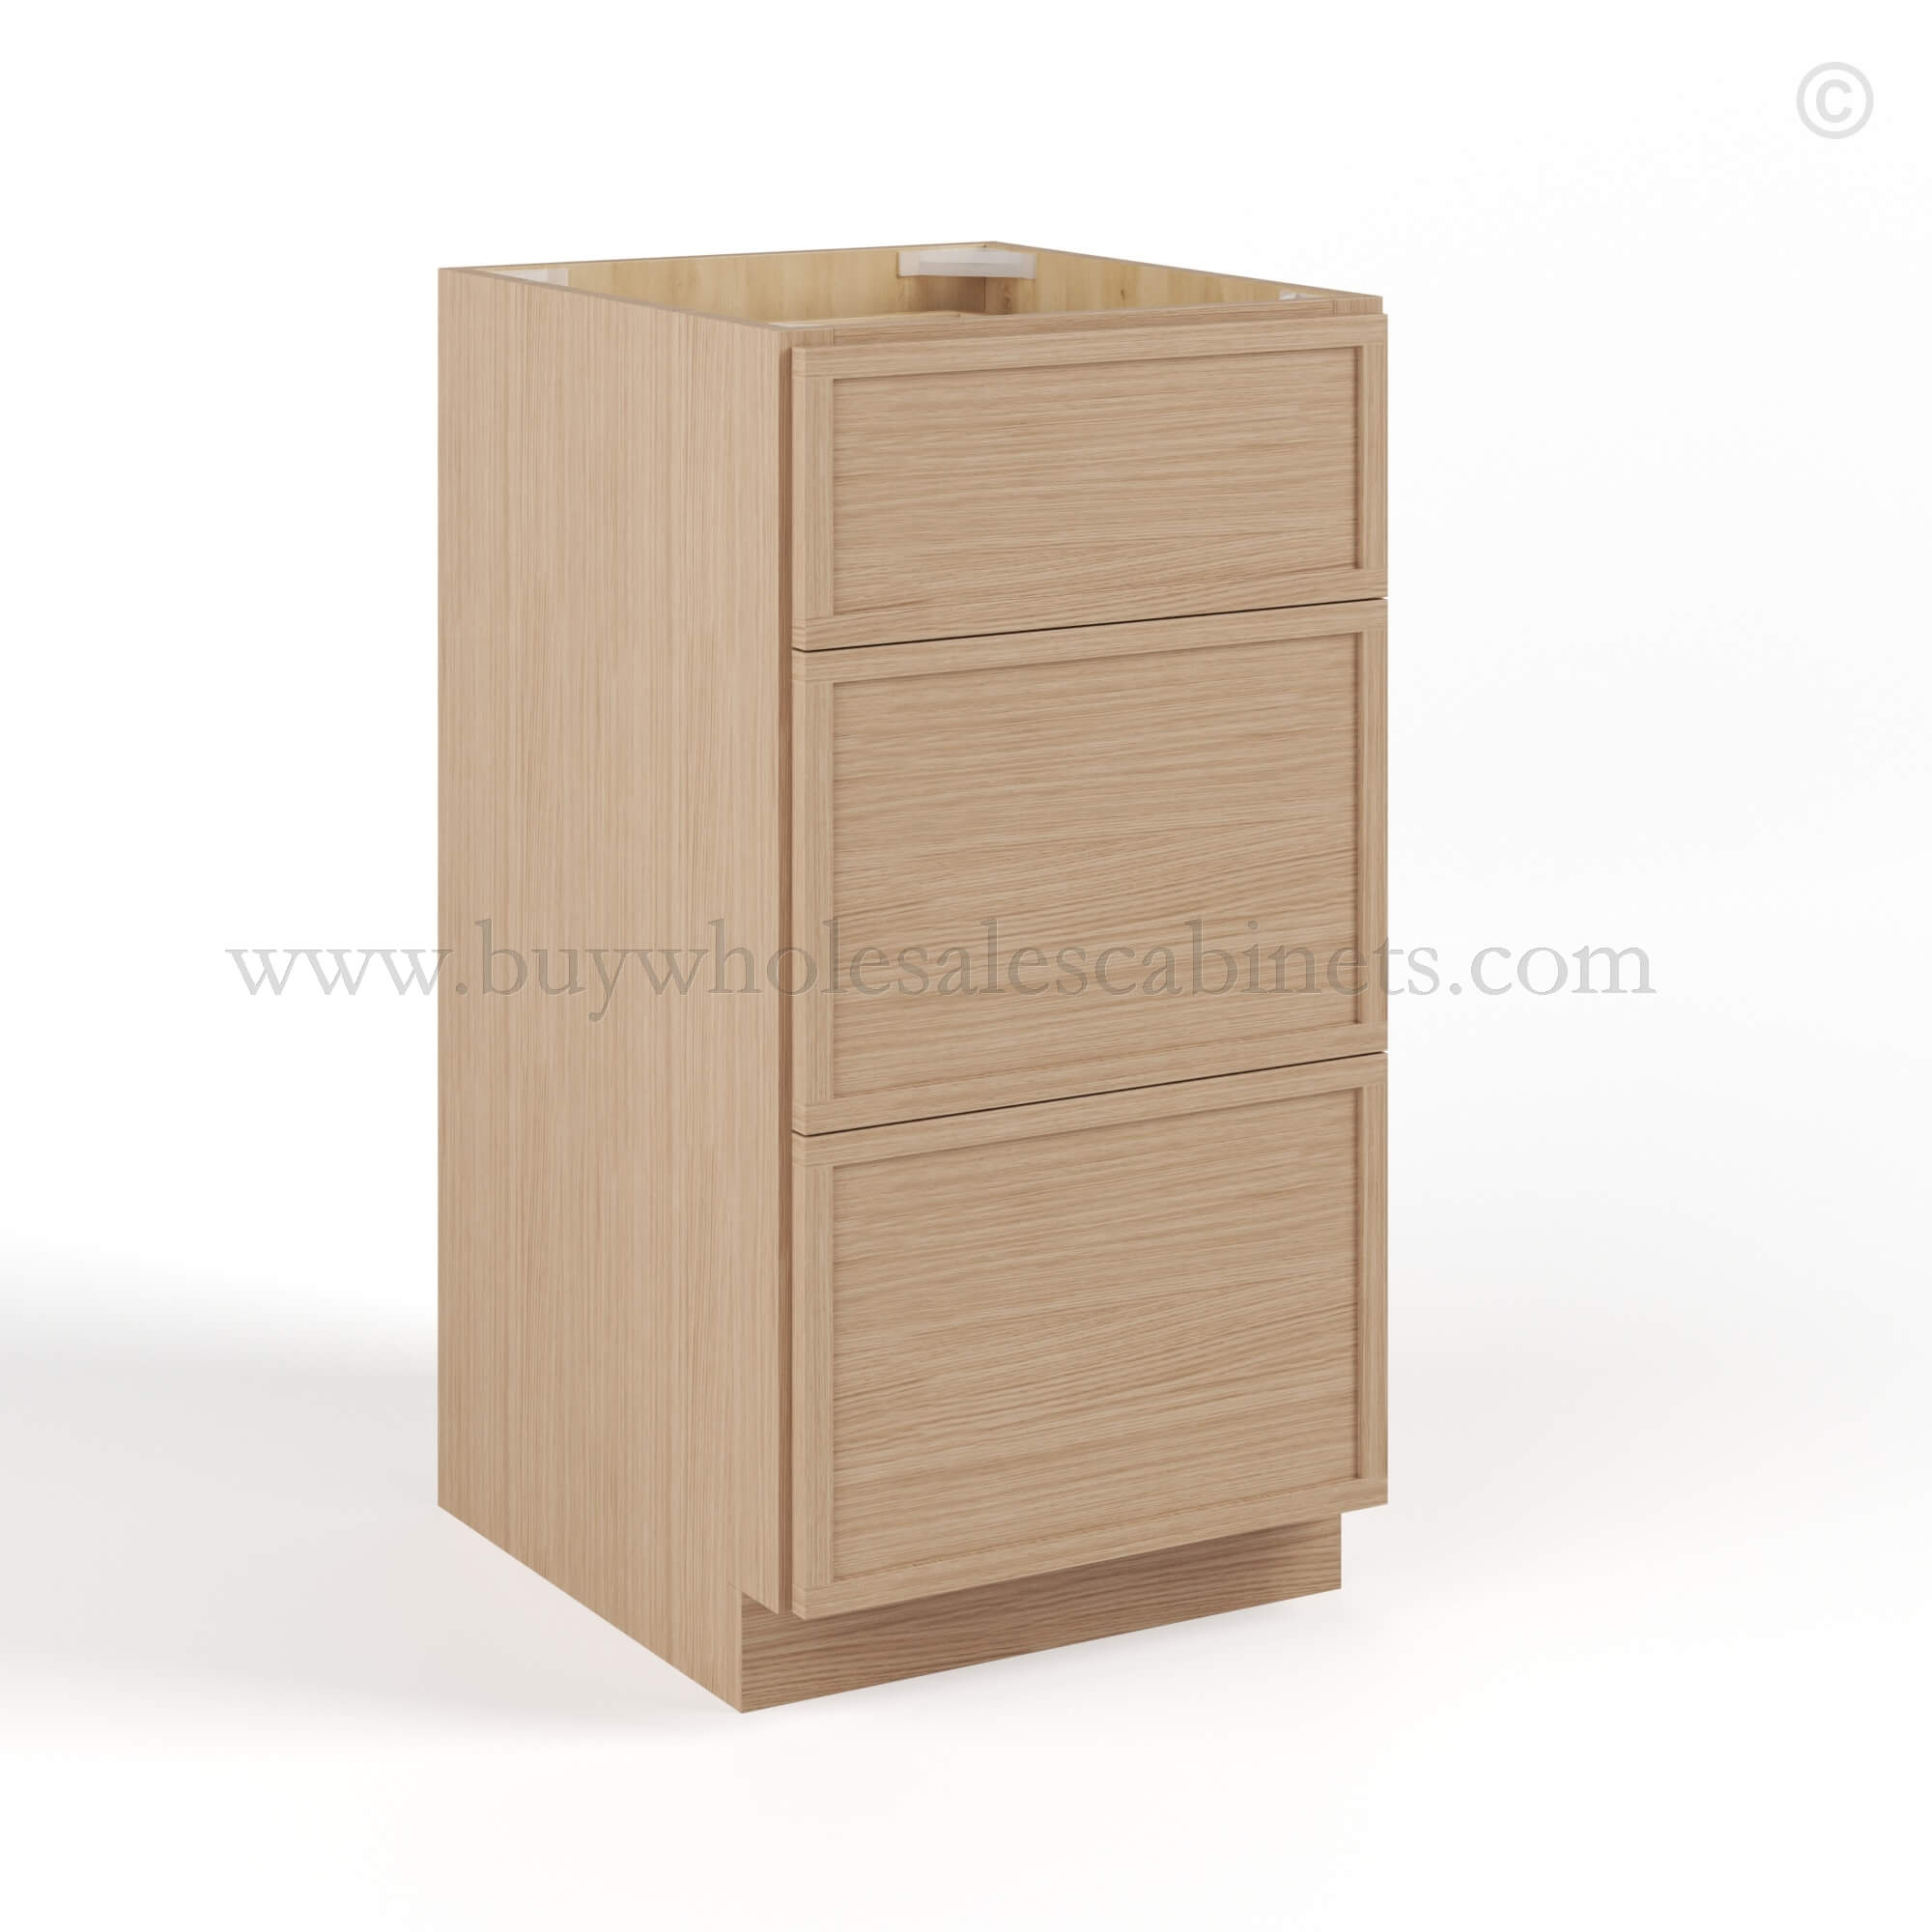 Slim Oak Shaker Vanity Drawer Base Cabinet, rta cabinets, wholesale cabinets